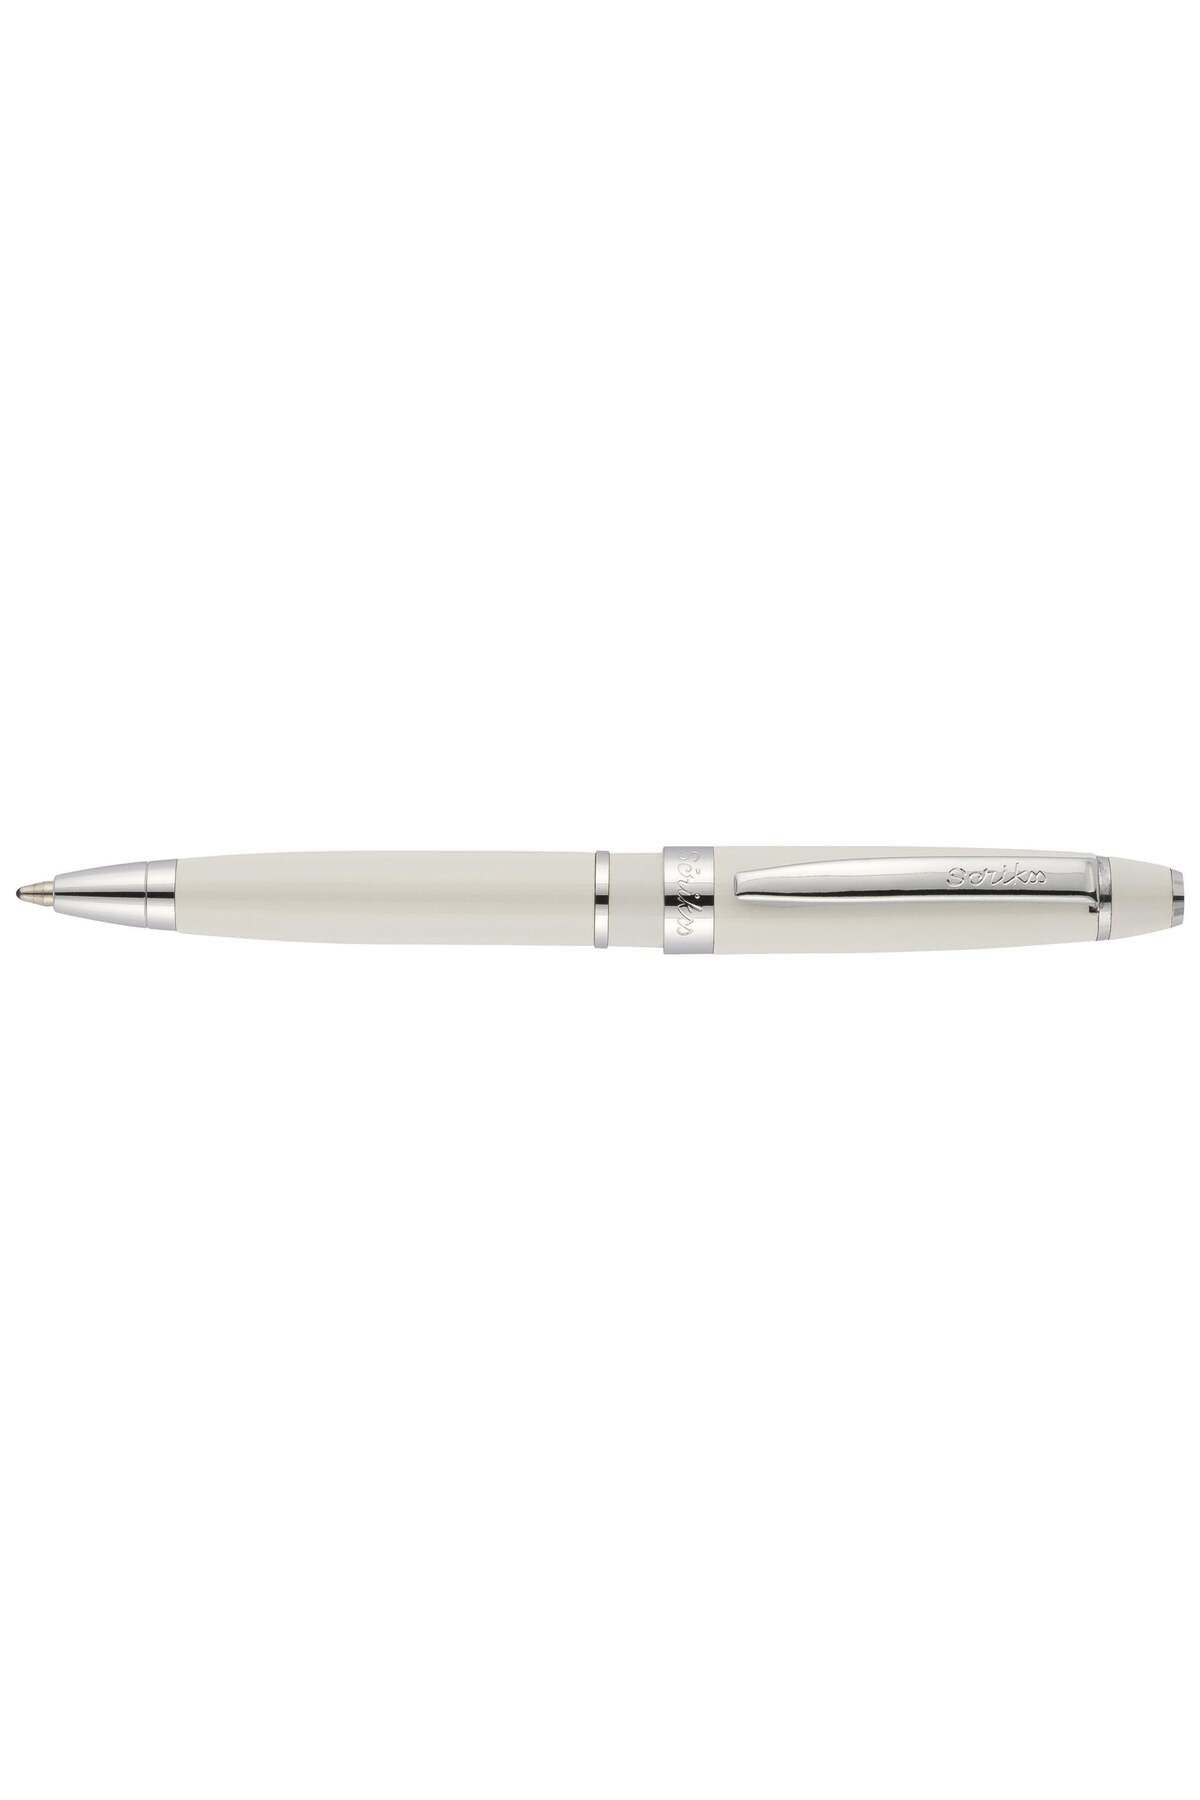 Scrikss Mini Pen Tükenmez Kalem Inci Beyazı, Şeffaf Ambalaj